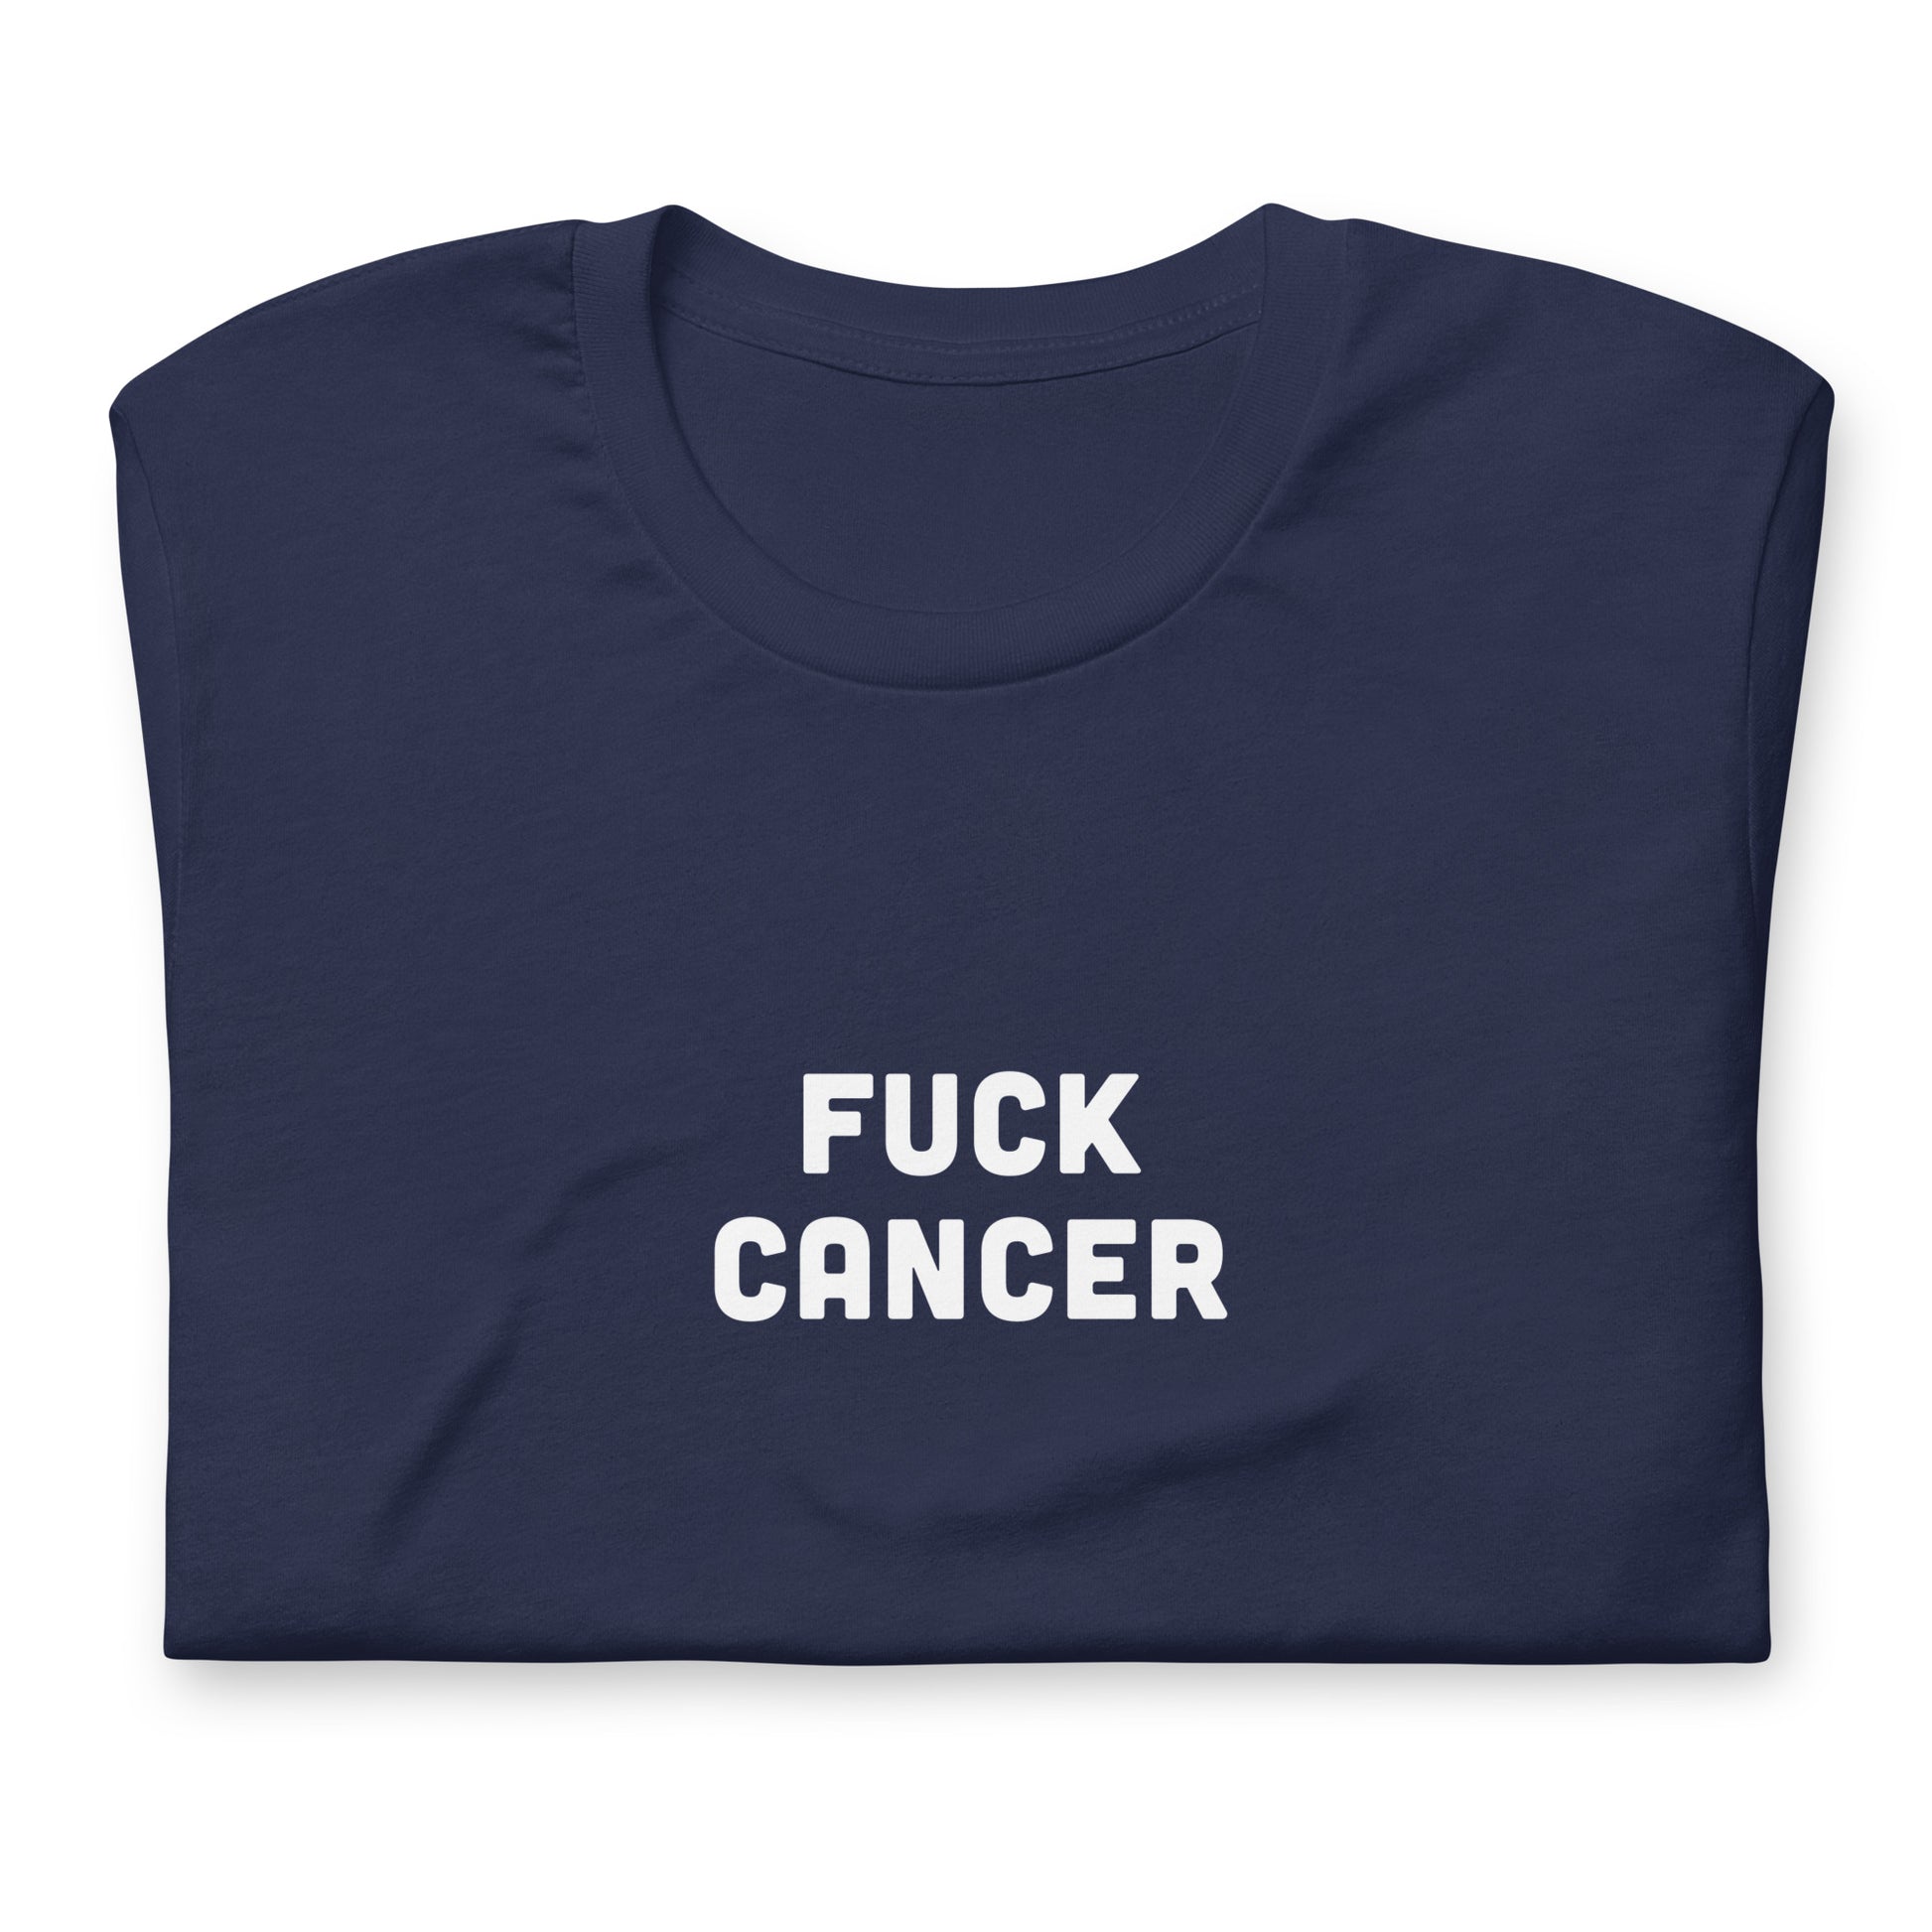 Fuck Cancer T-Shirt Size M Color Black